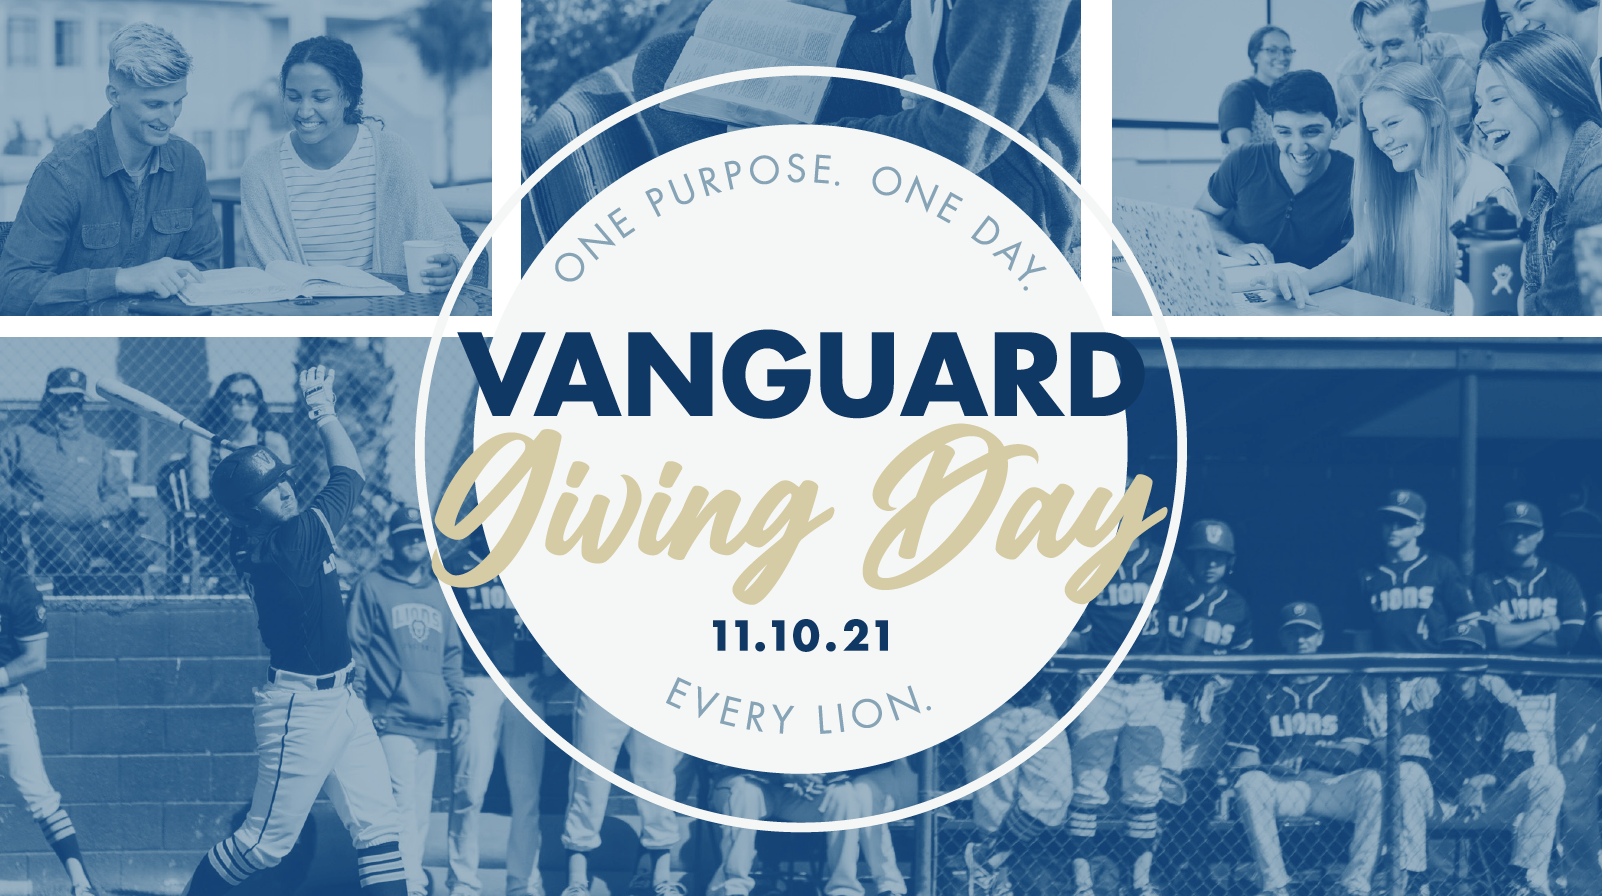 Vanguard Giving Day